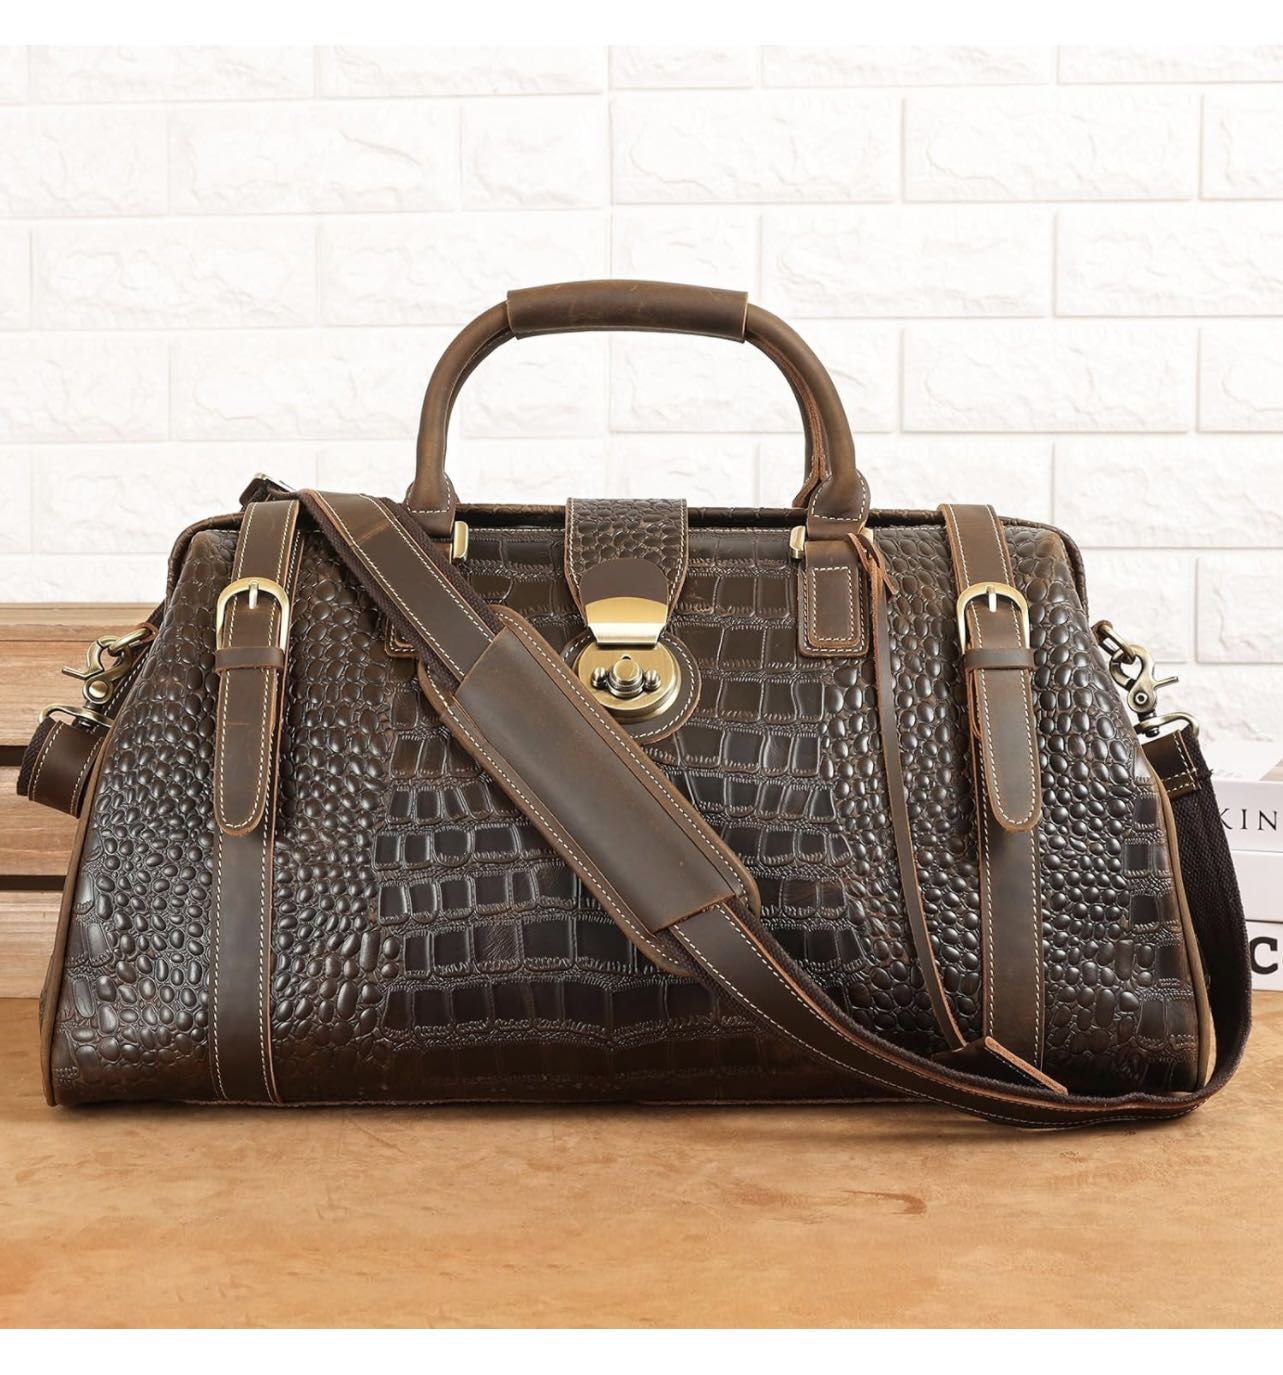 21" Vintage Cowhide Leather Weekender Travel Overnight Luggage Stylish Duffel Bag